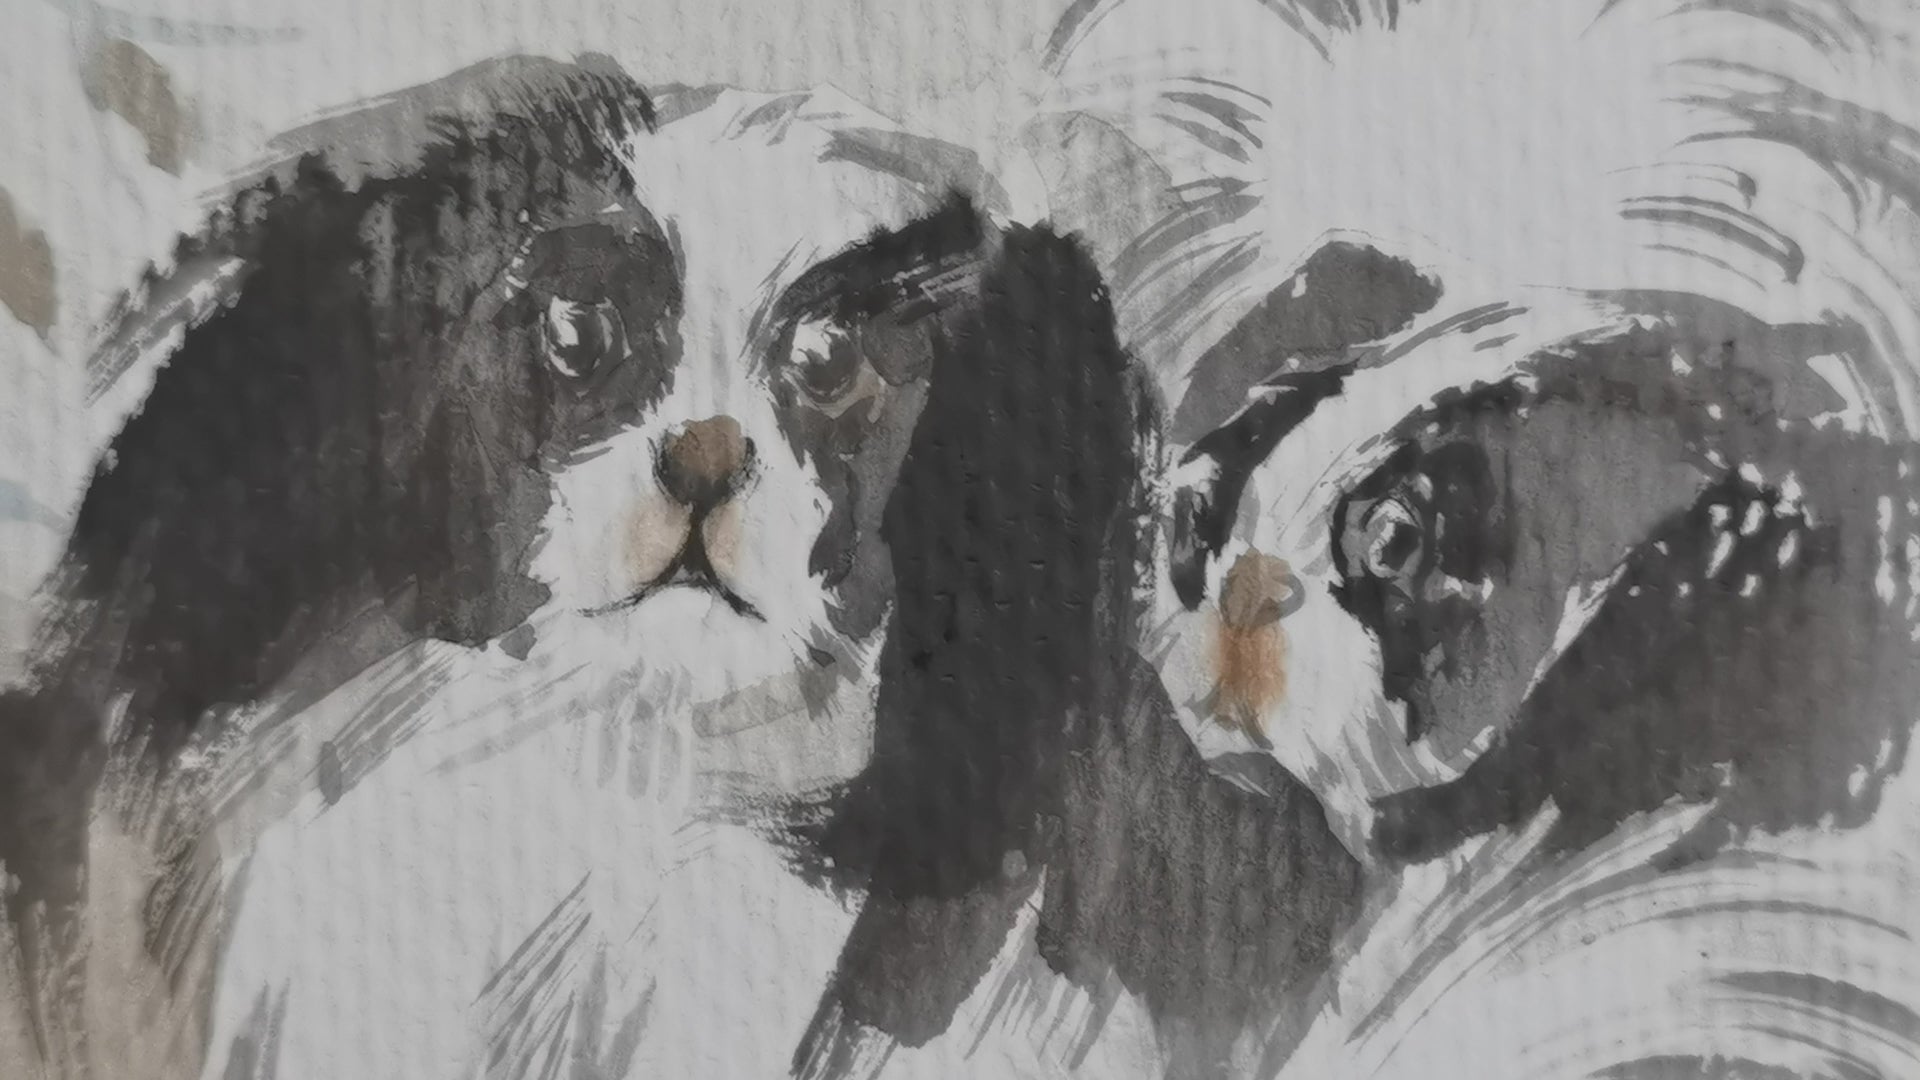 Pekingese Perception Handmade Art Printing Animal Dog Cute with Wood Frame